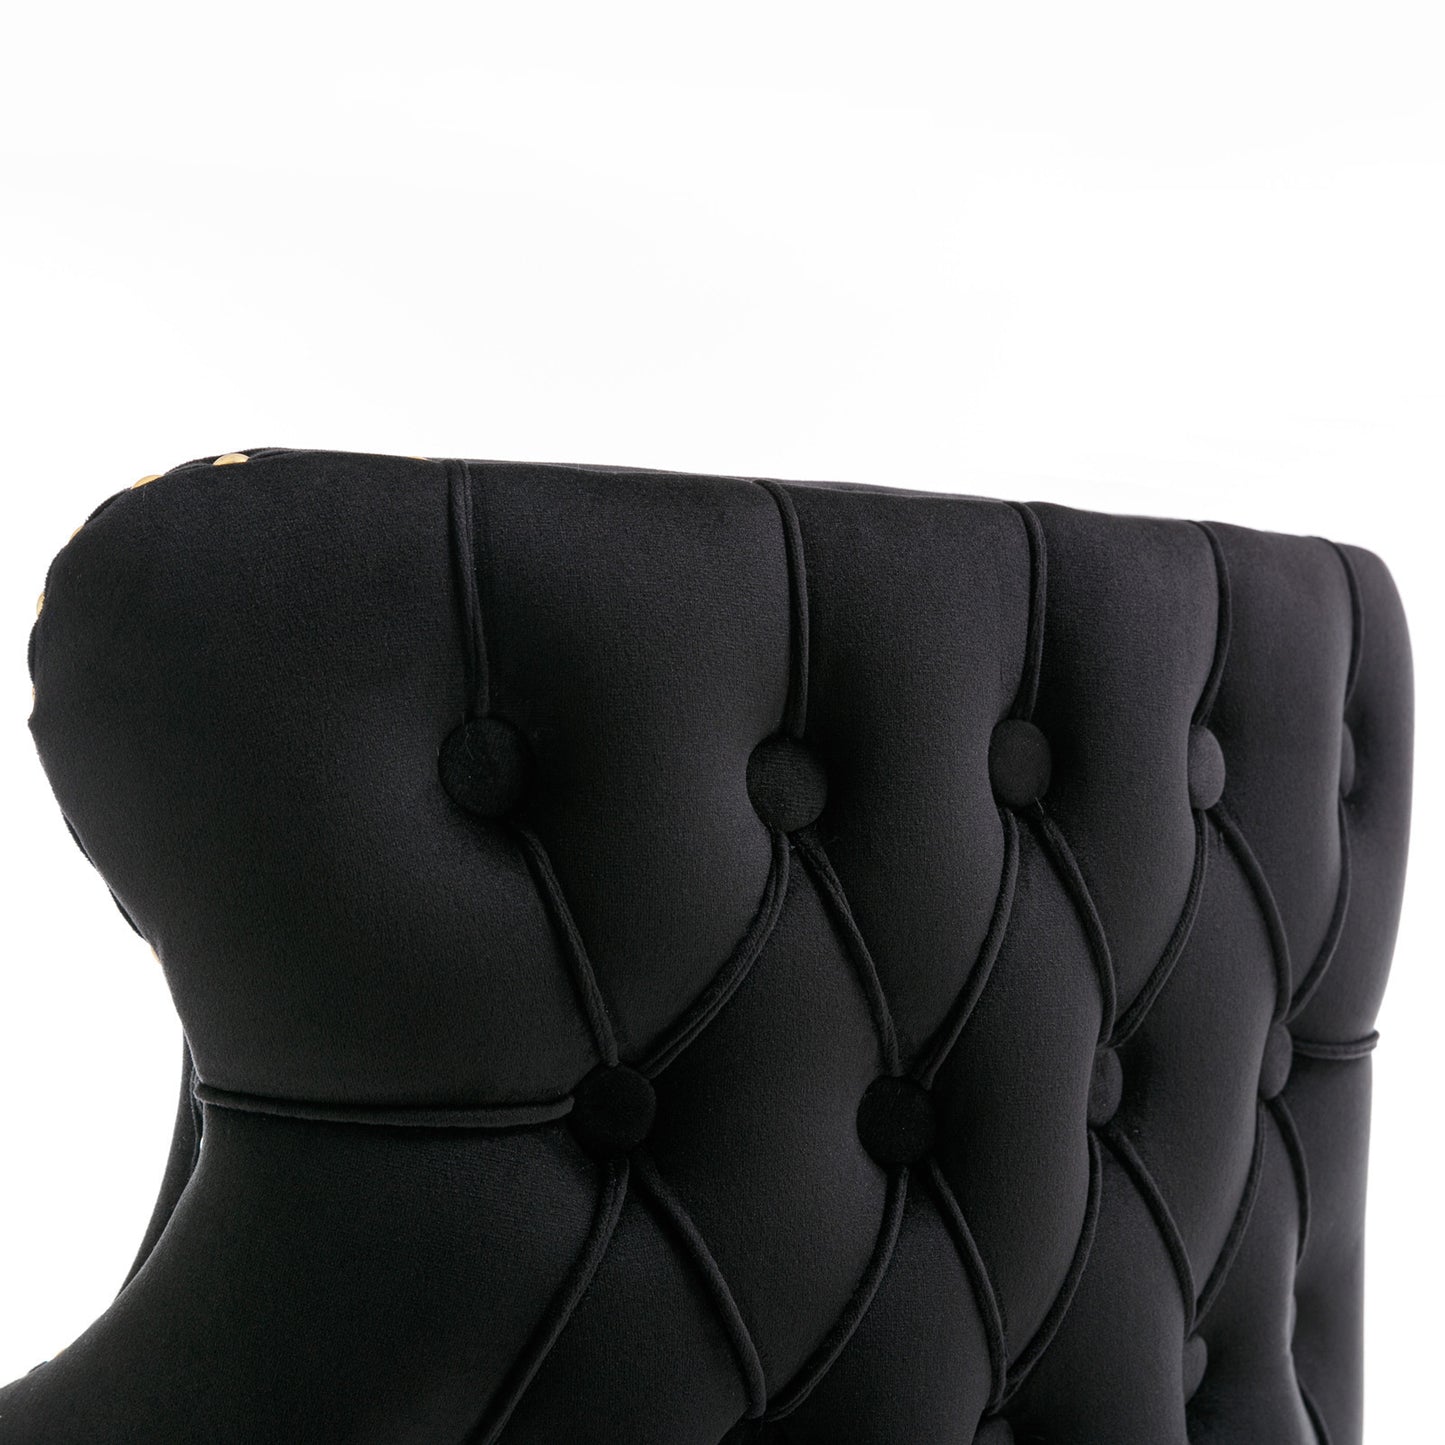 1st Choice Black Swivel Velvet Barstools Adjustable Seat Height - Set of 2